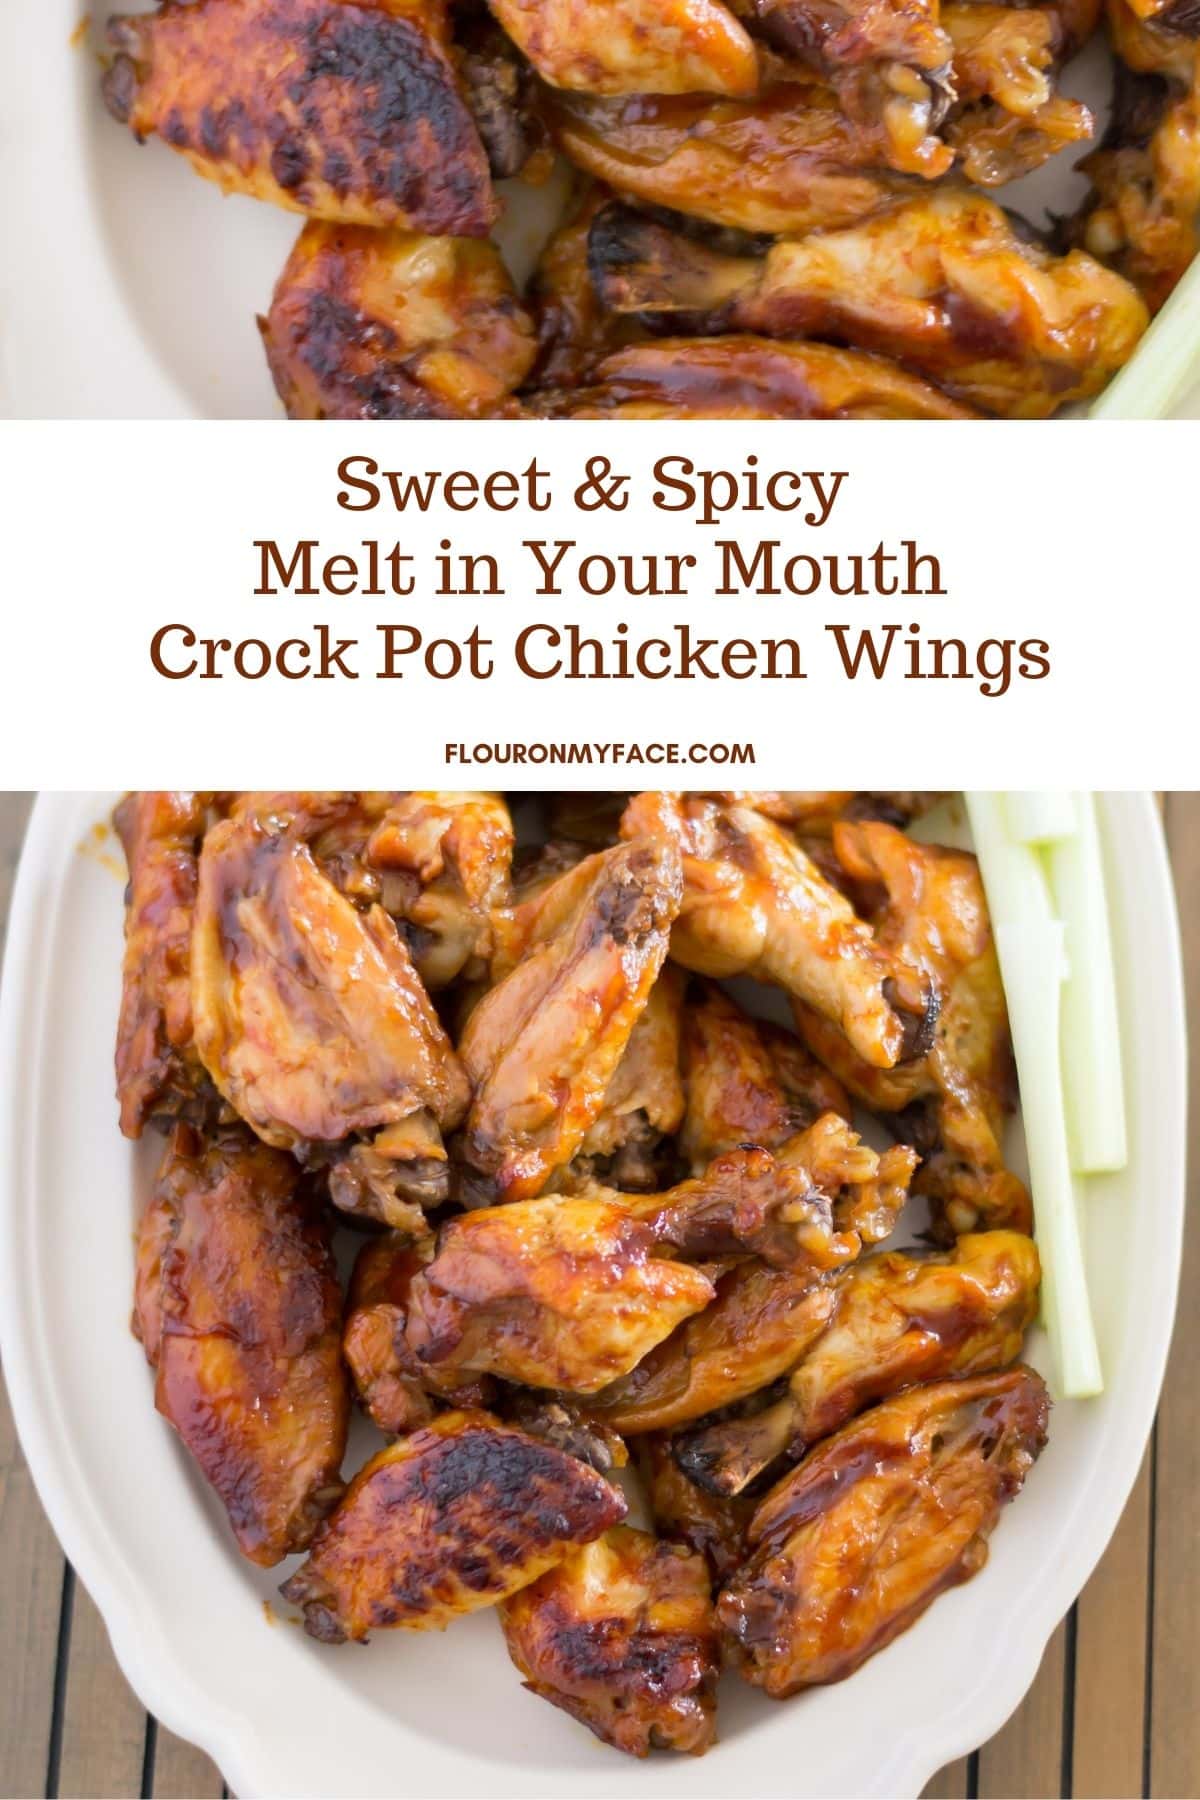 Sweet & Spicy Crock Pot Chicken Wings on a serving platter